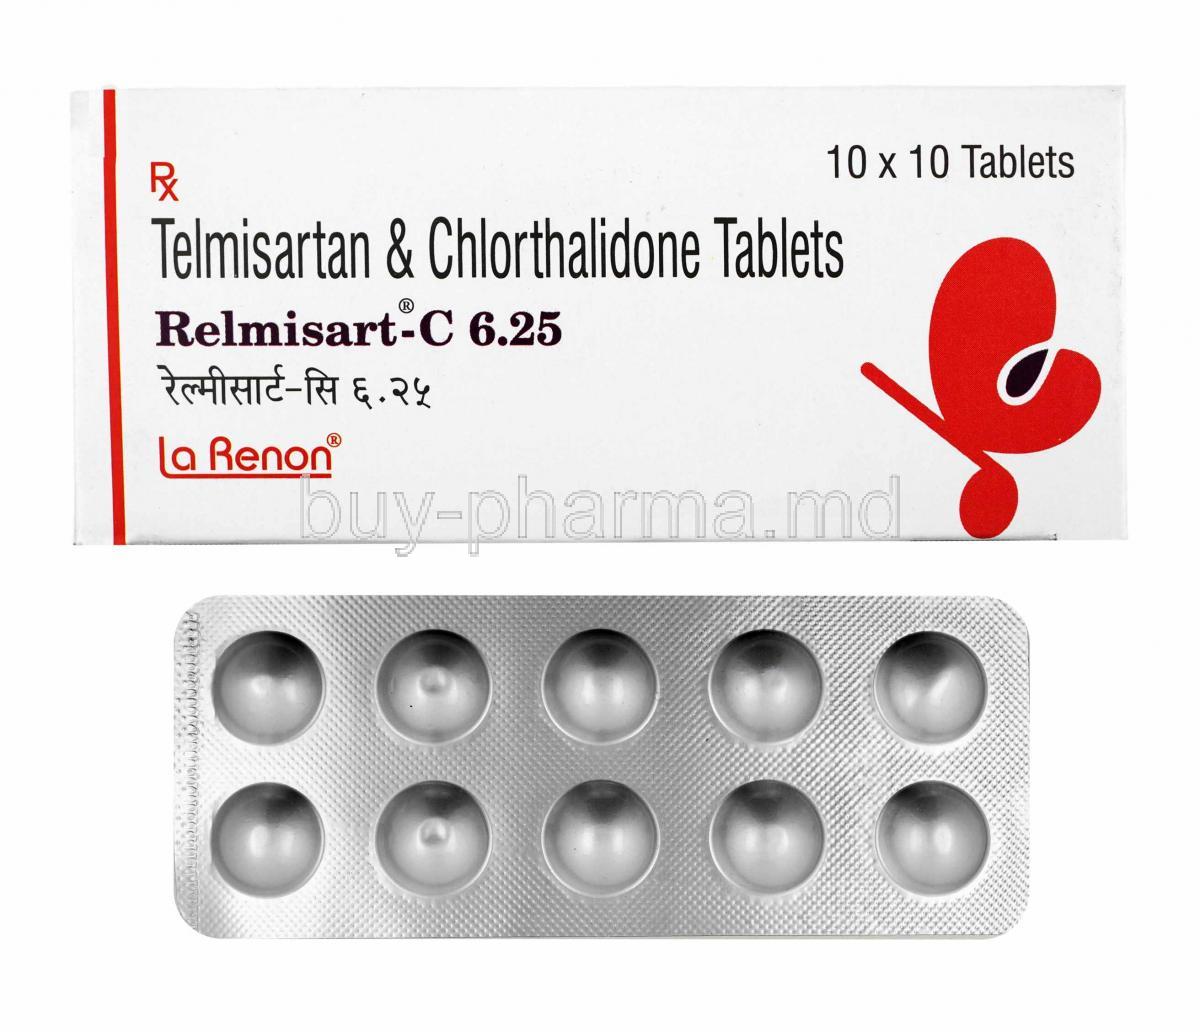 Relmisart-C, Telmisartan and Chlorthalidone 6.25mg box and tablets